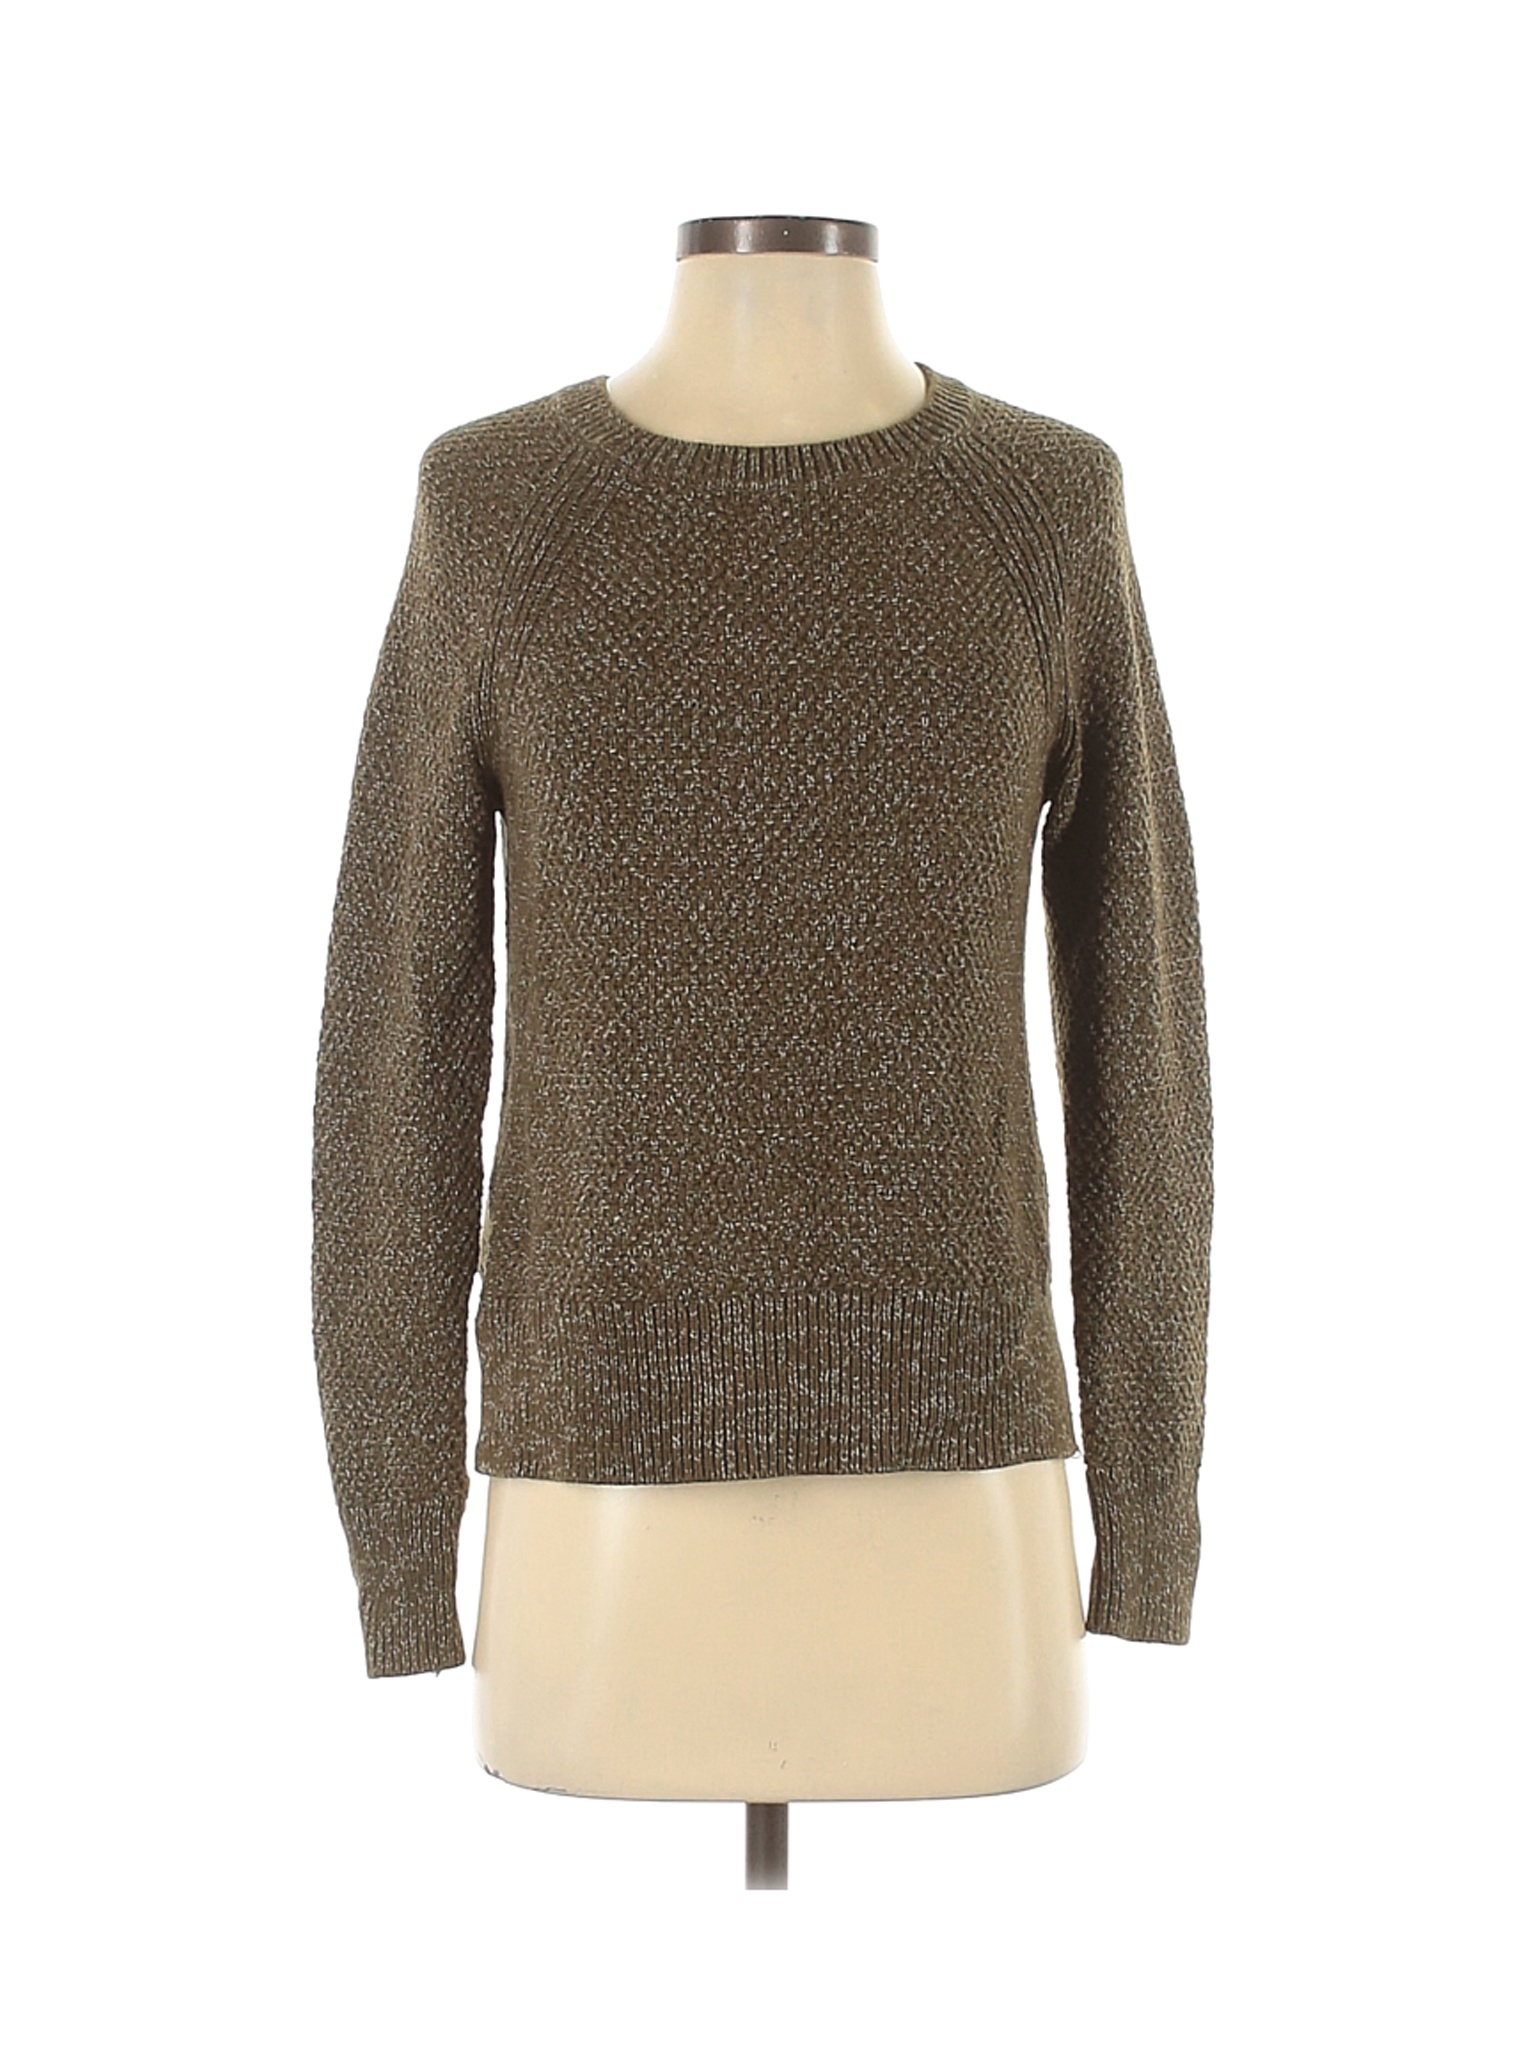 Gap Women Green Pullover Sweater XS | eBay